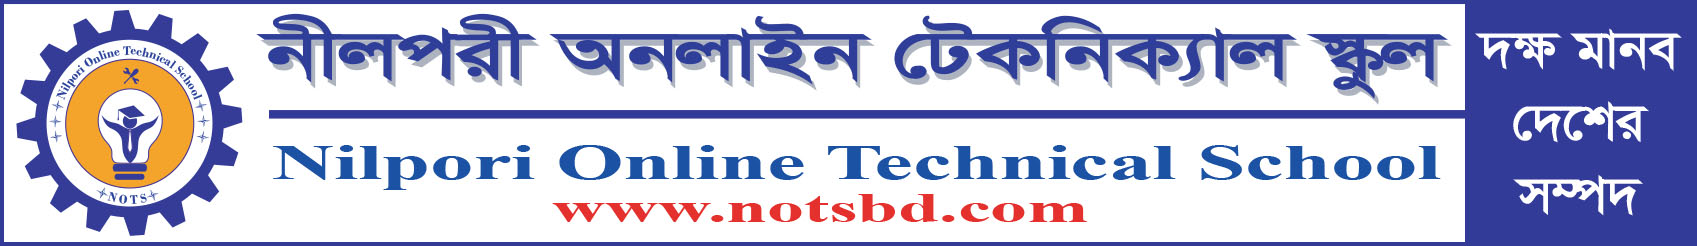 Nilpori Online Technical School